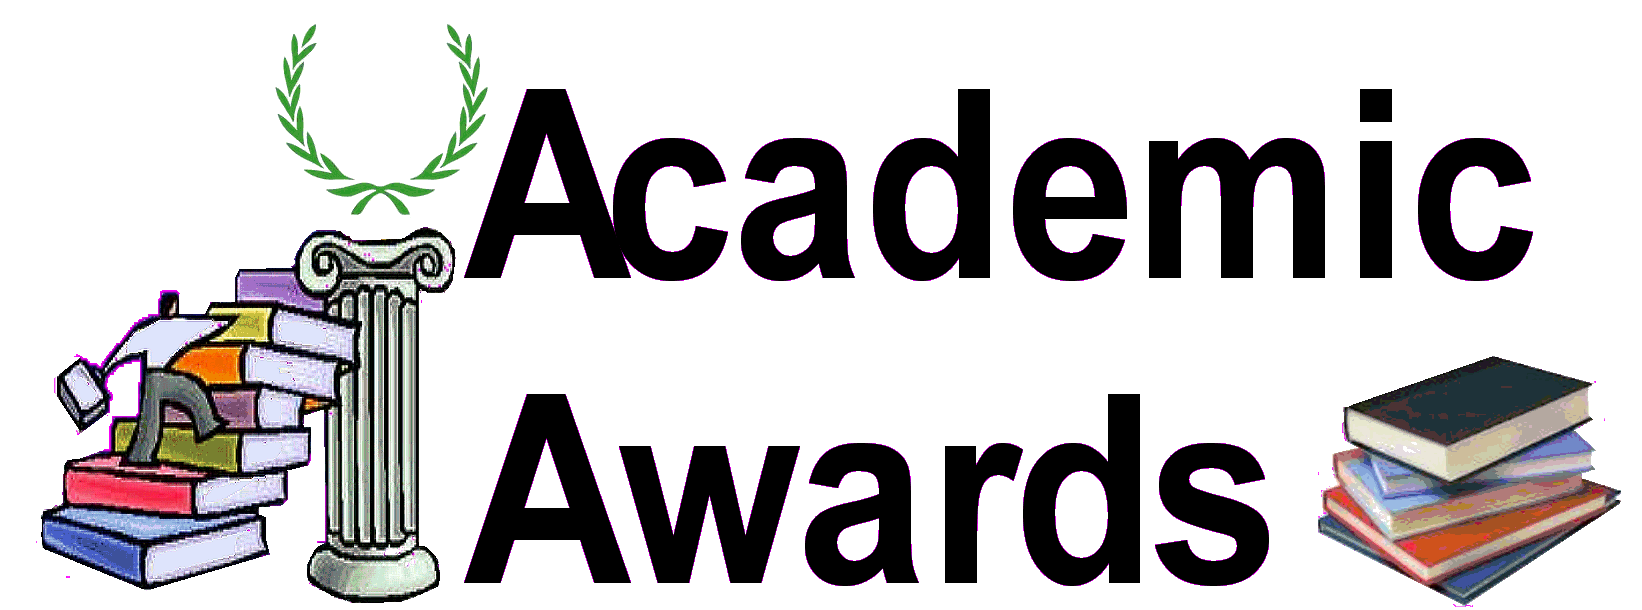 Academic awards cif southern. Curriculum clipart school achievement